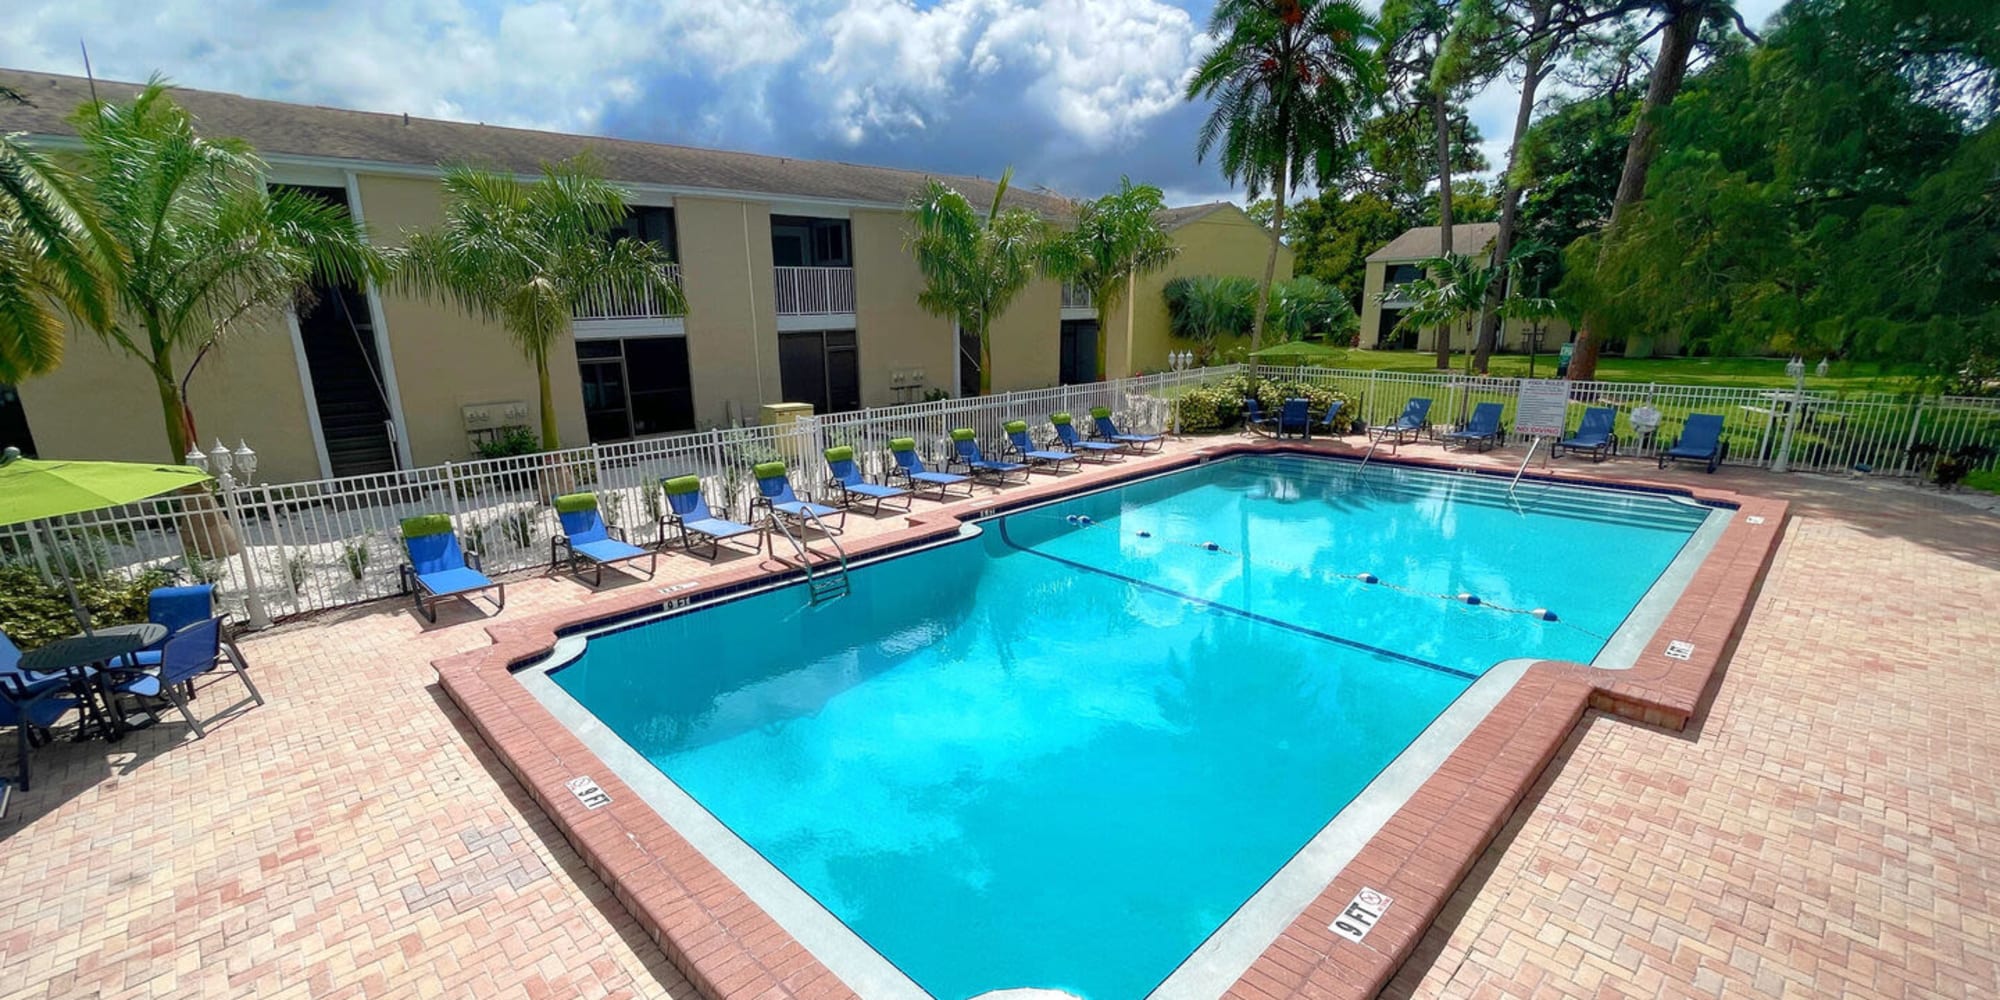 Apartments at Garden Grove in Sarasota, Florida